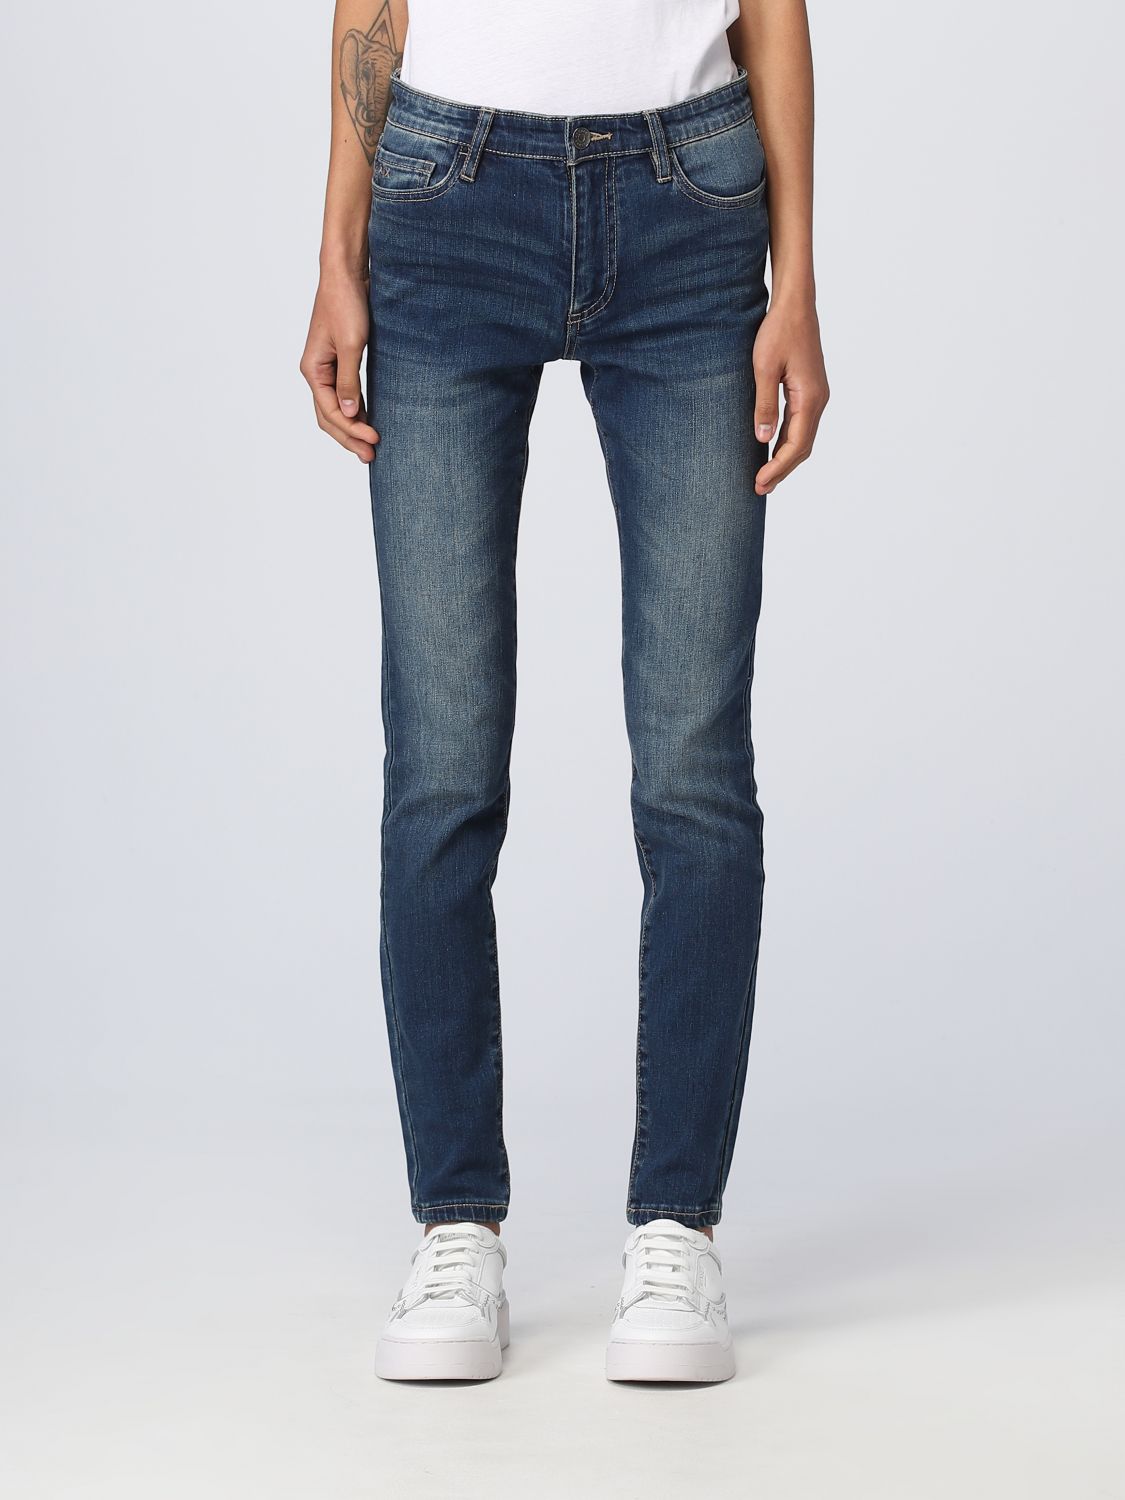 ARMANI EXCHANGE: jeans for woman - Indigo | Armani Exchange jeans ...